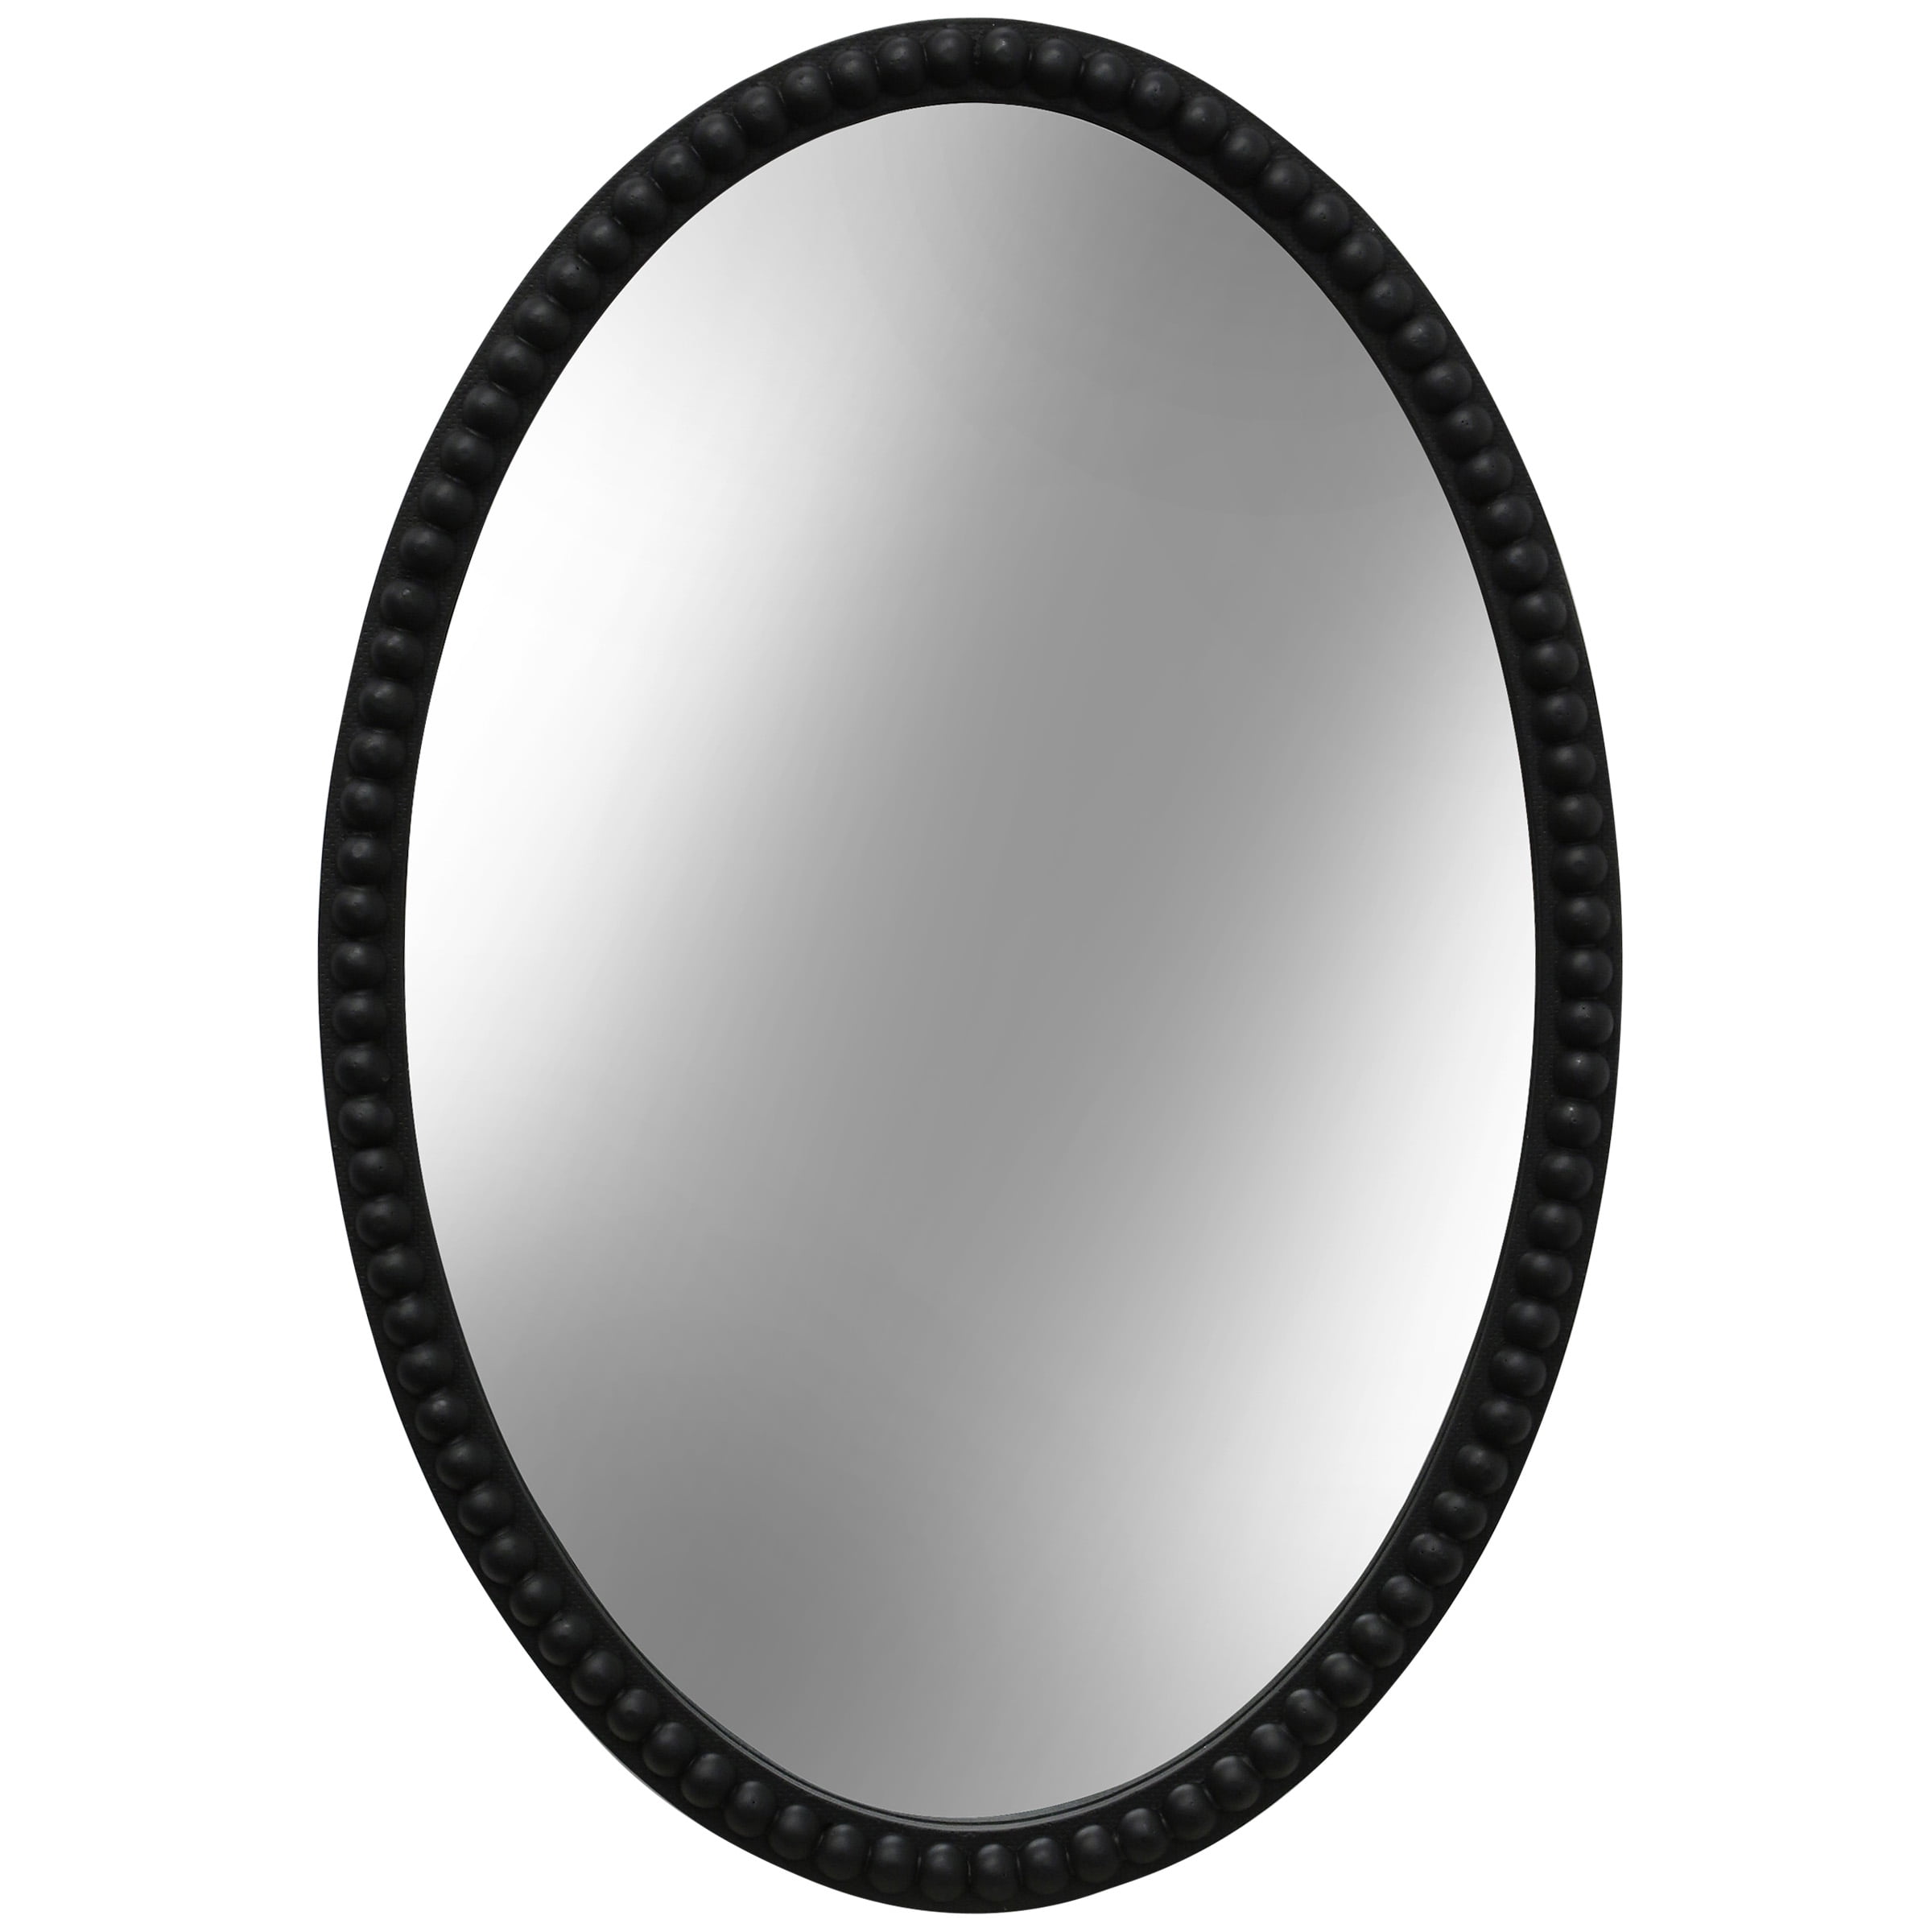 Black Oval Wood Frame Mirror with Beaded Trim - Walmart.com - Walmart.com